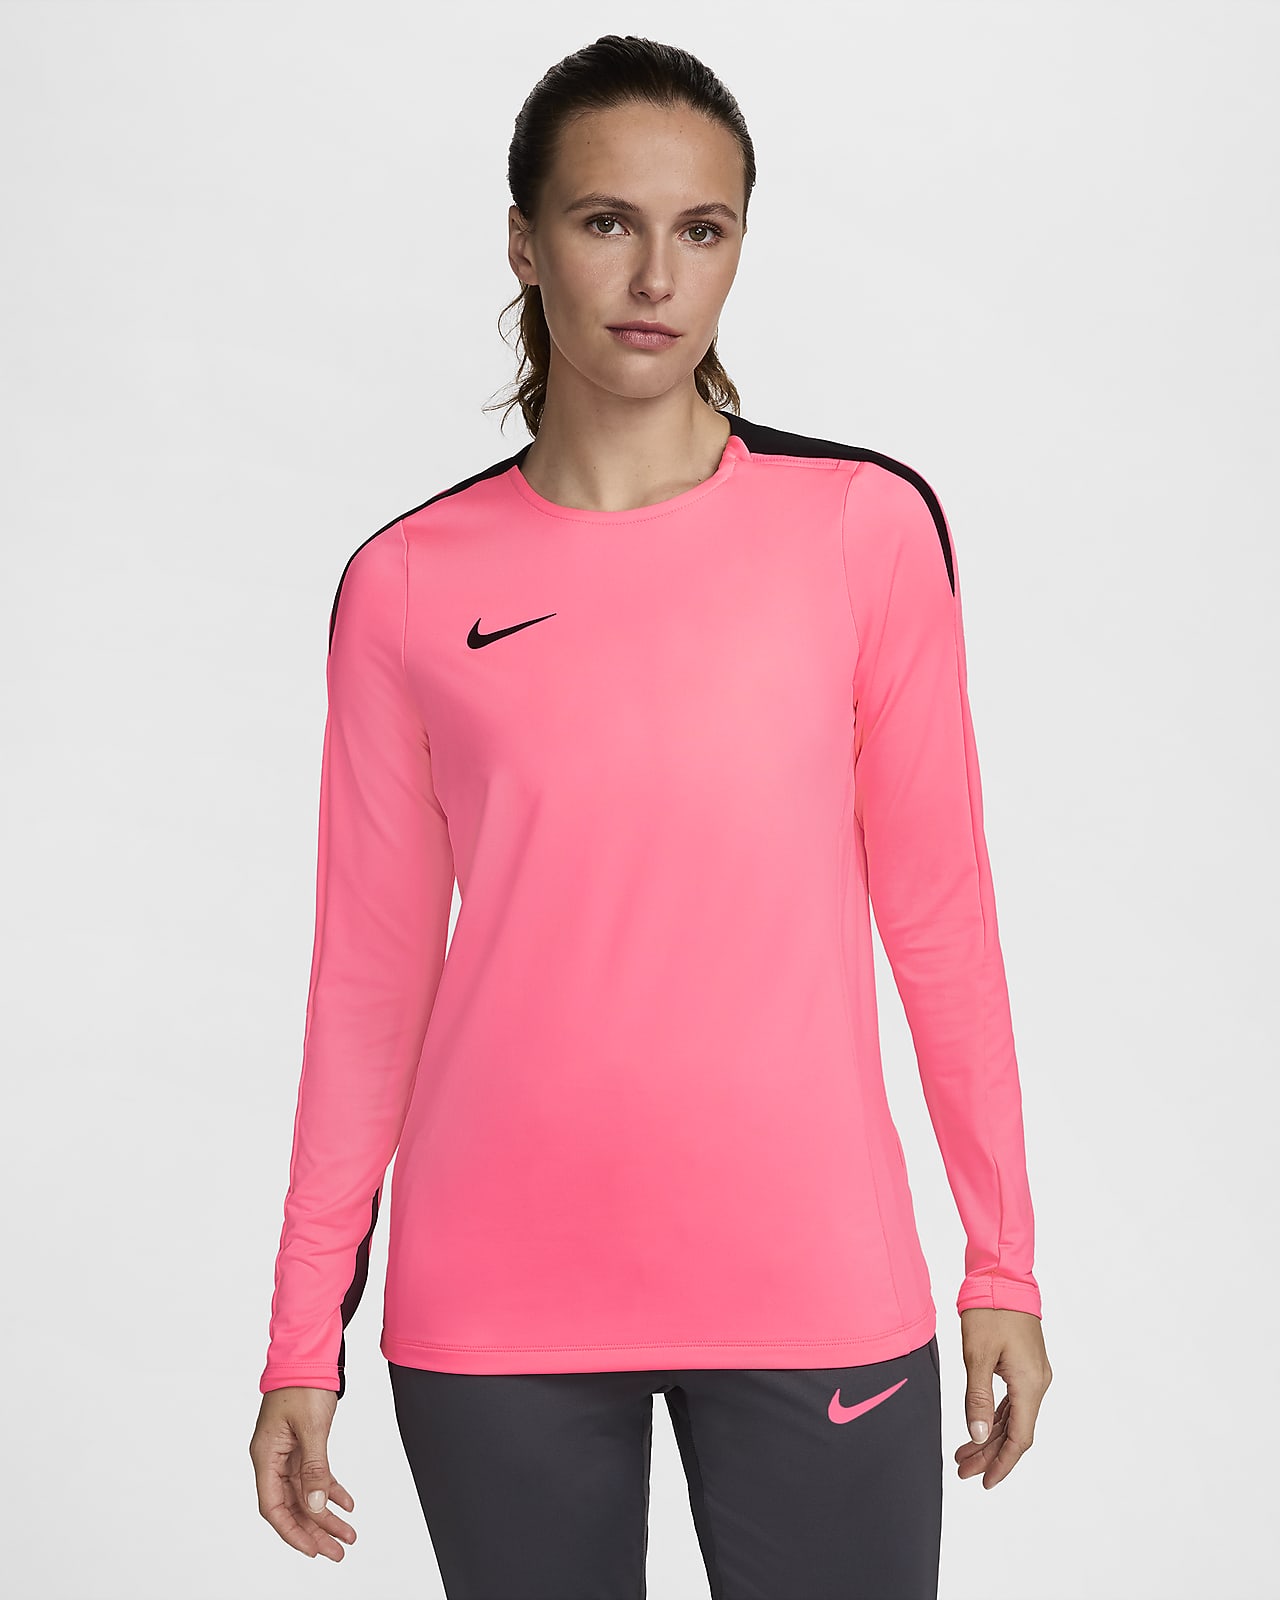 Nike Strike Dri-FIT fotballoverdel med rund hals til dame